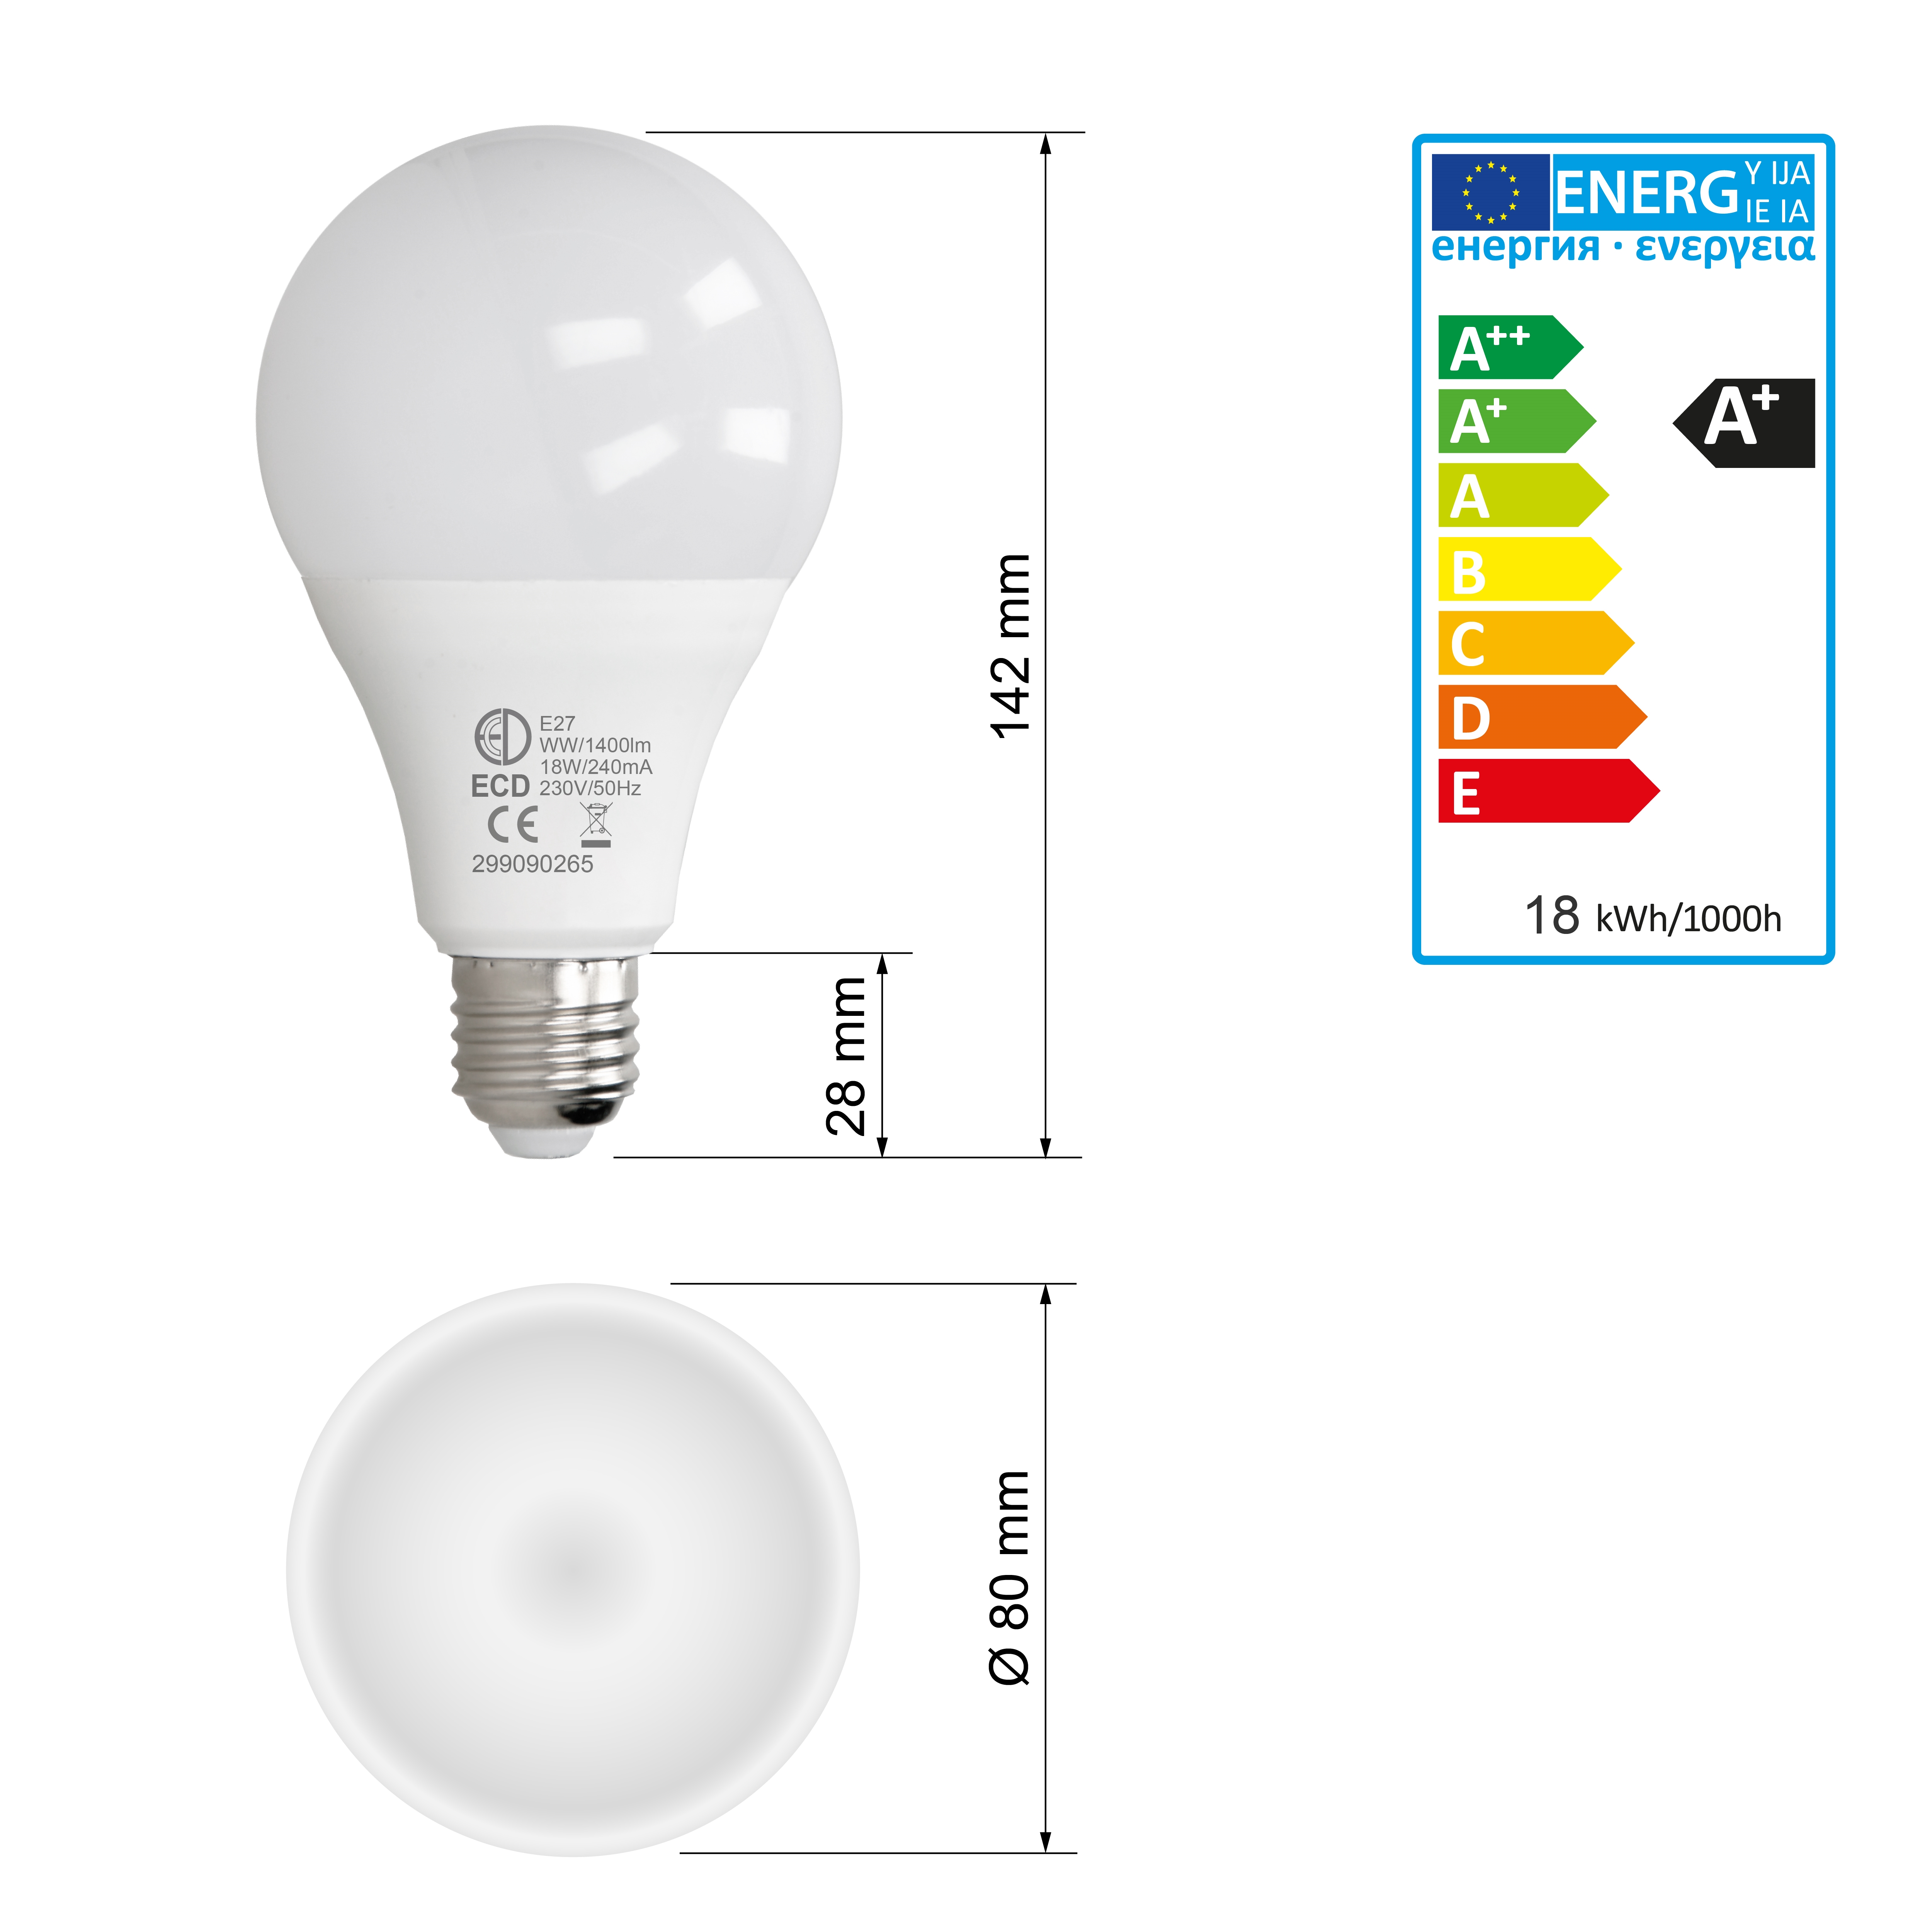 3W E27 LED Birne Lampe Glühbirne Leuchtmittel Bulb Sparlampe TdRfF